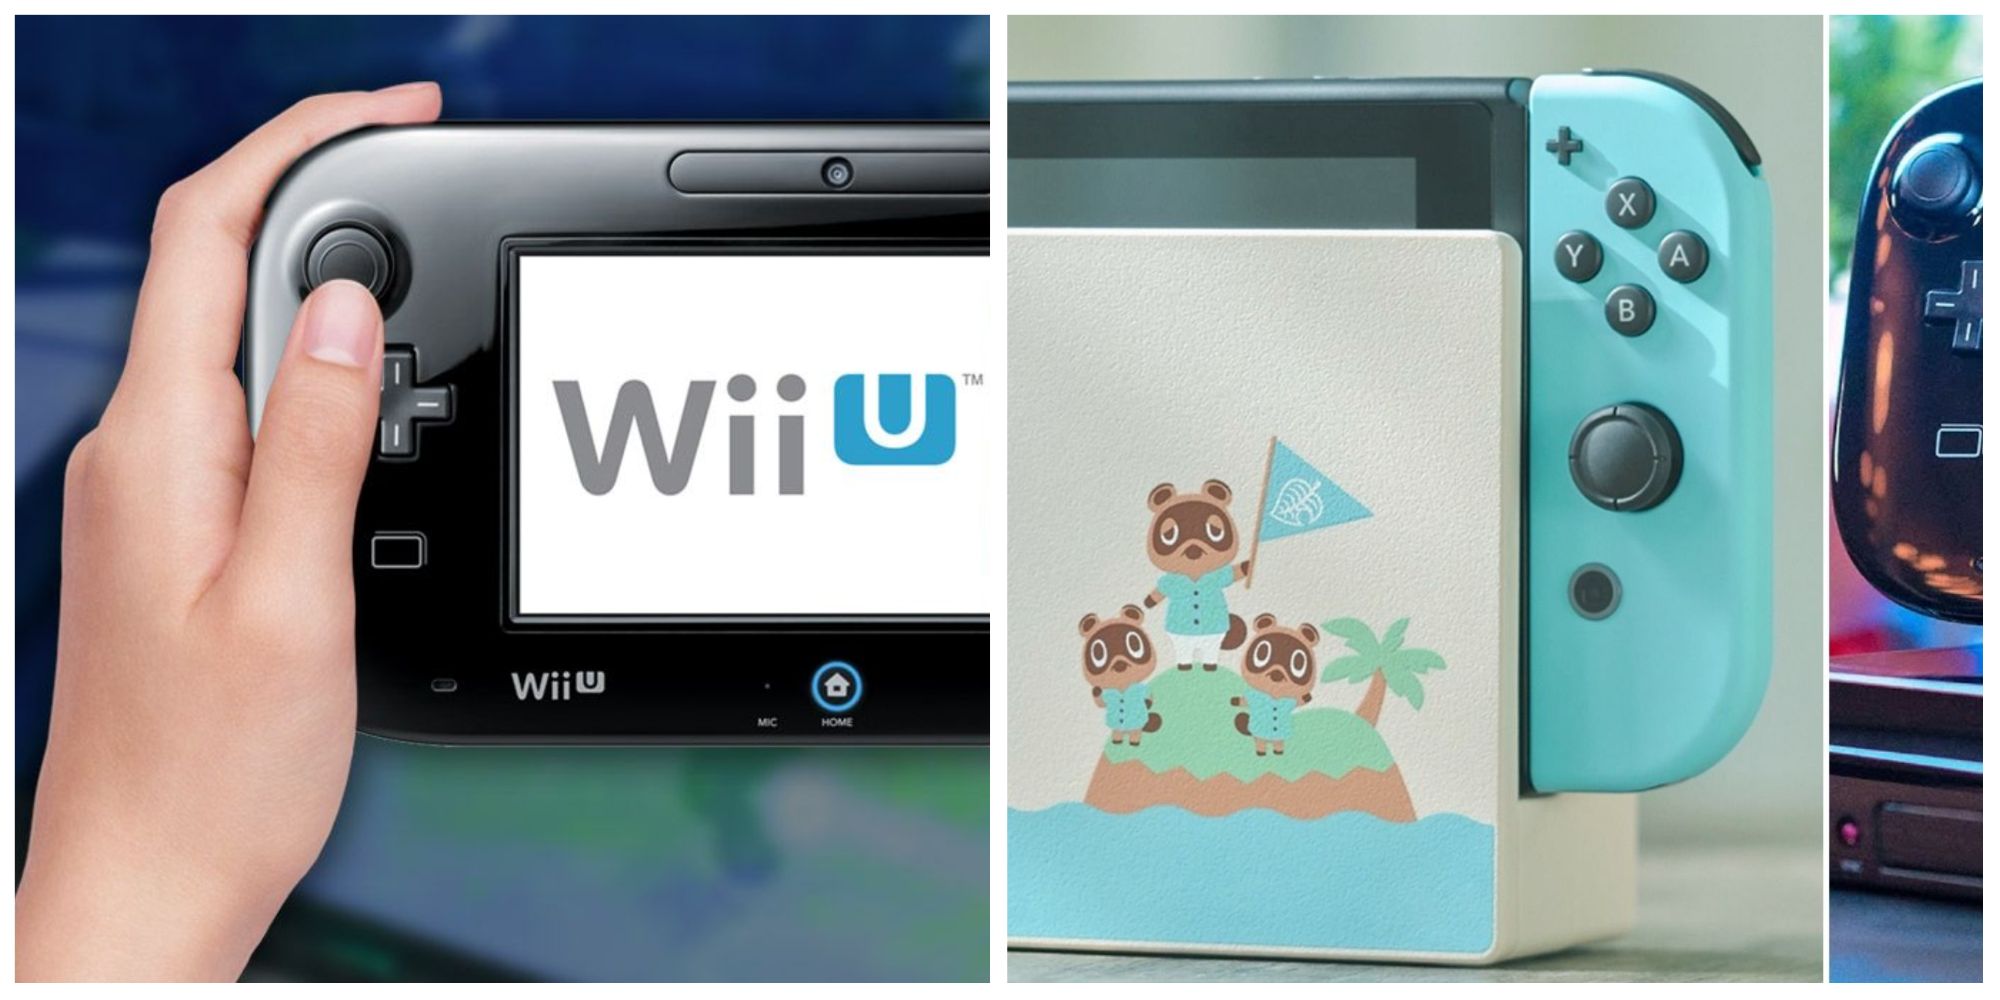 reloj Reciclar Comida sana 7 Things The Wii U Did Better Than The Switch